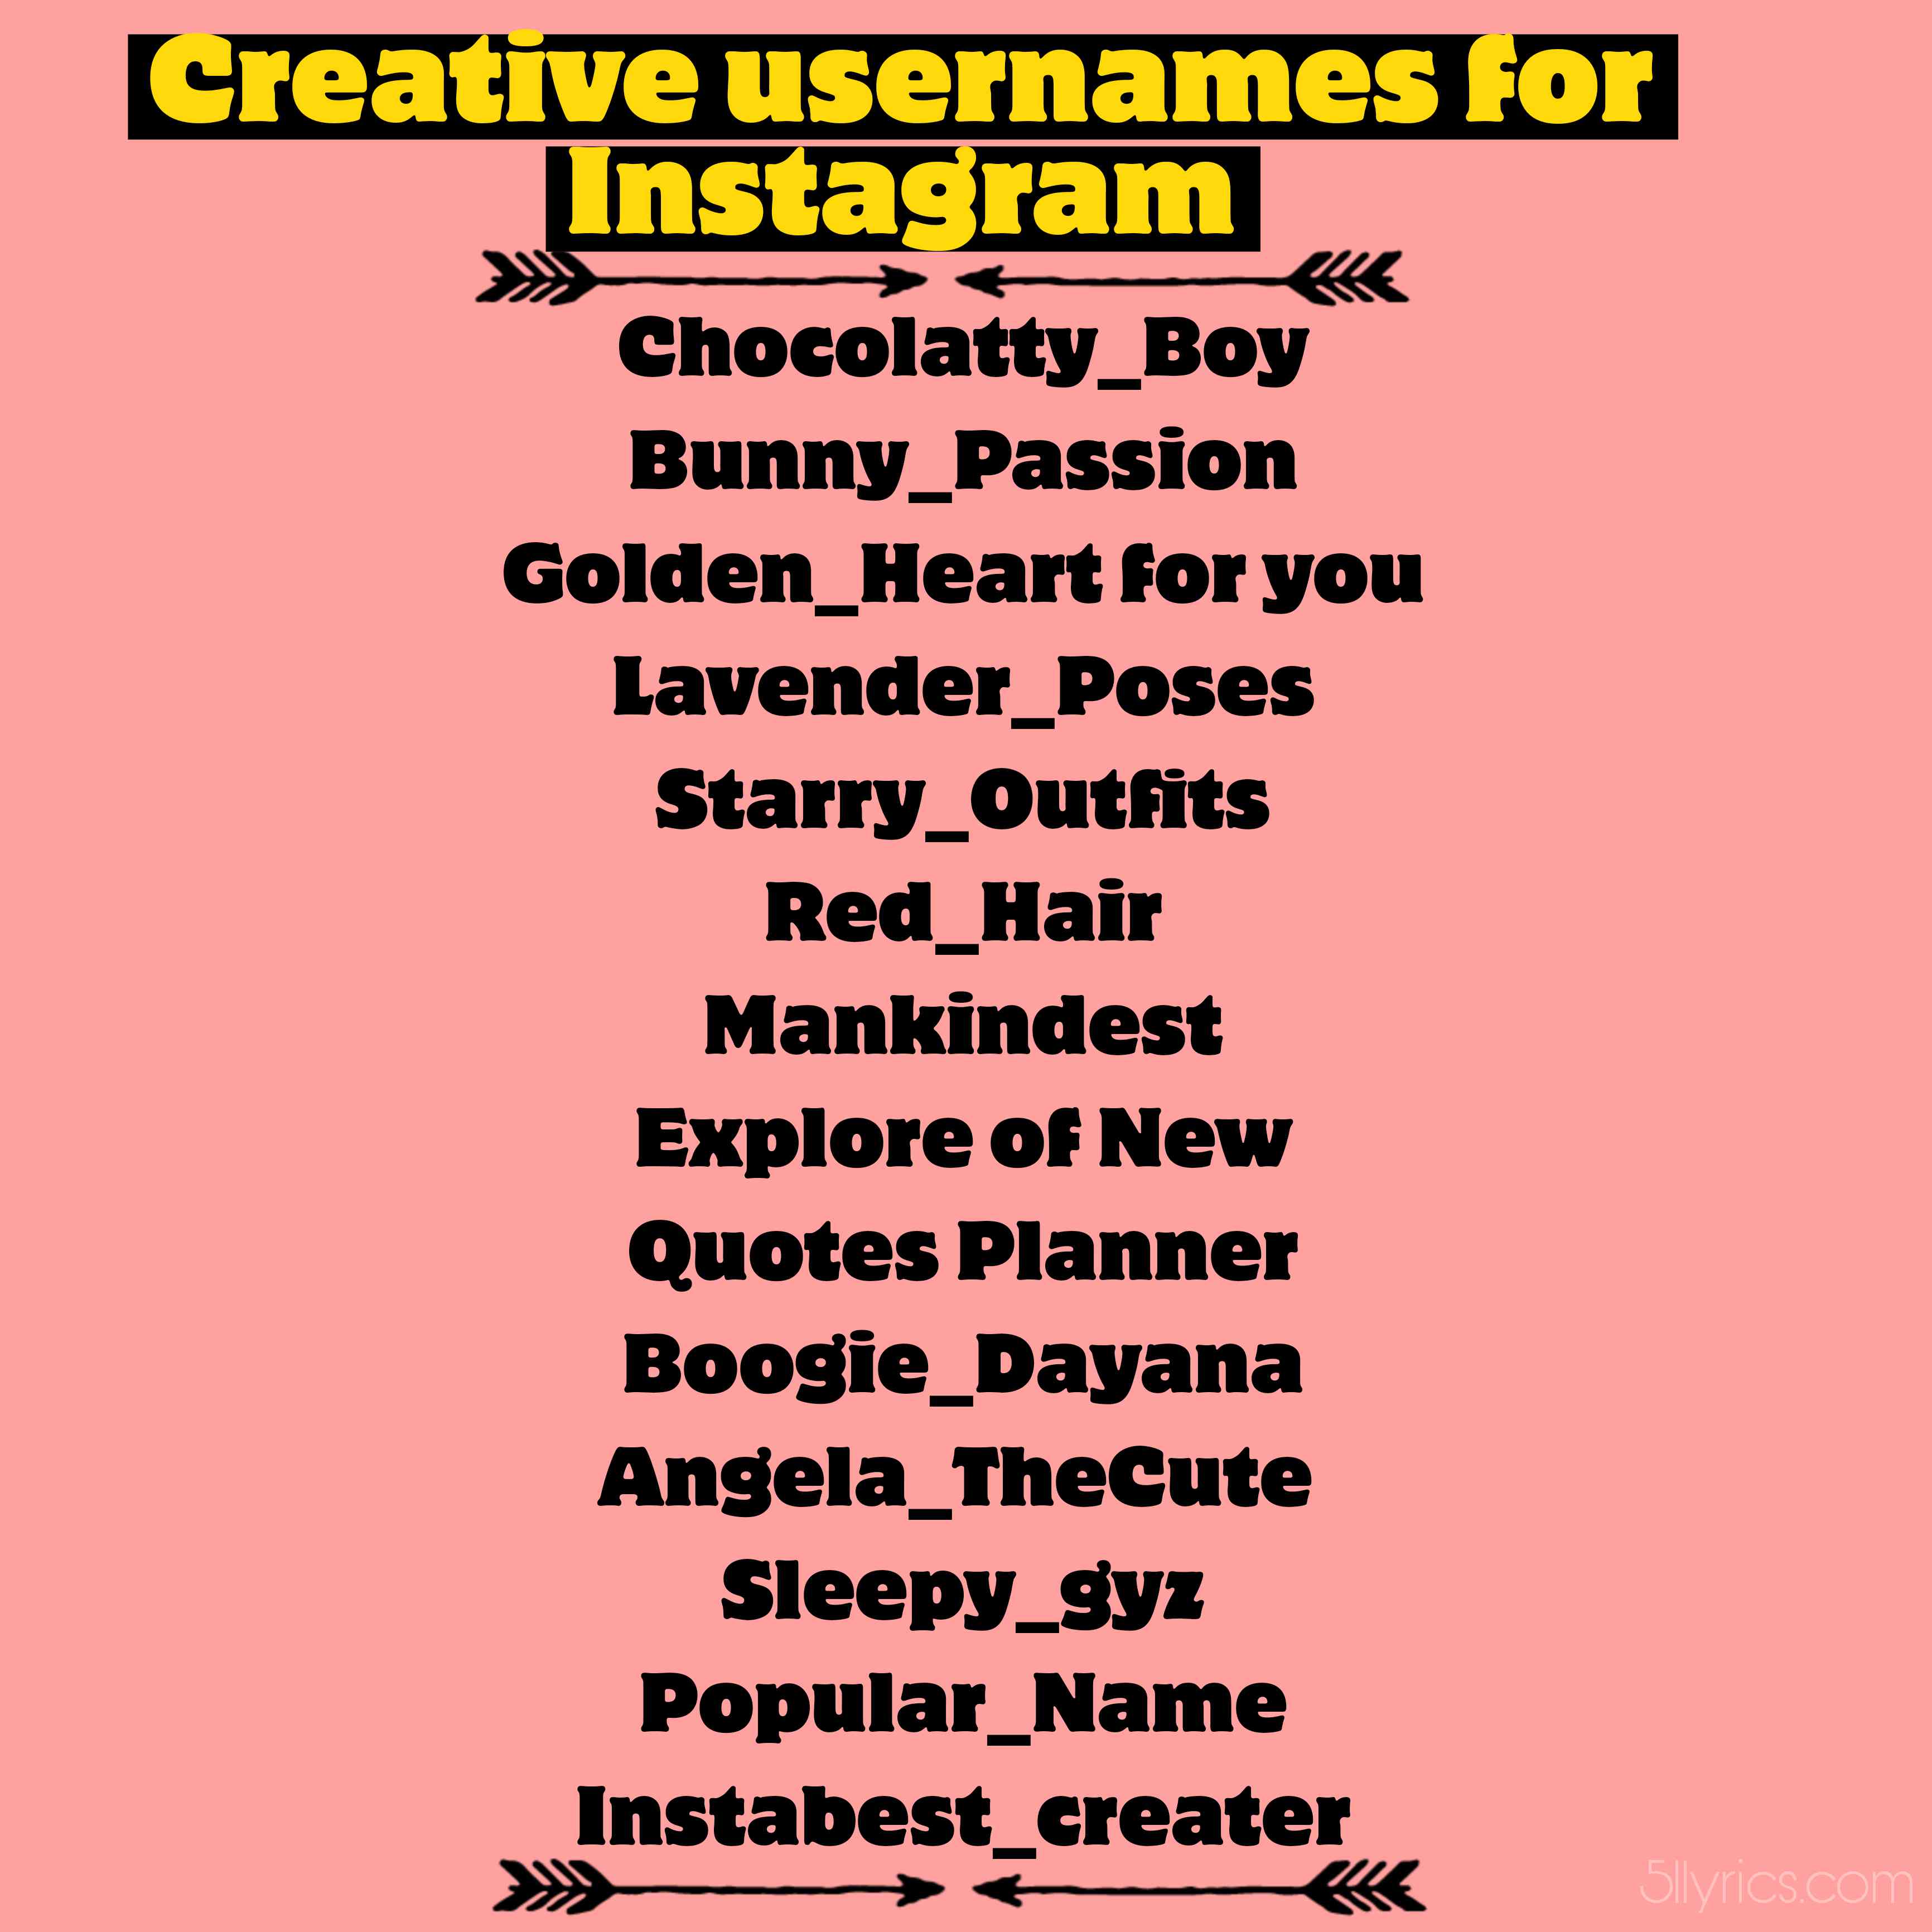 Creative usernames for Instagram